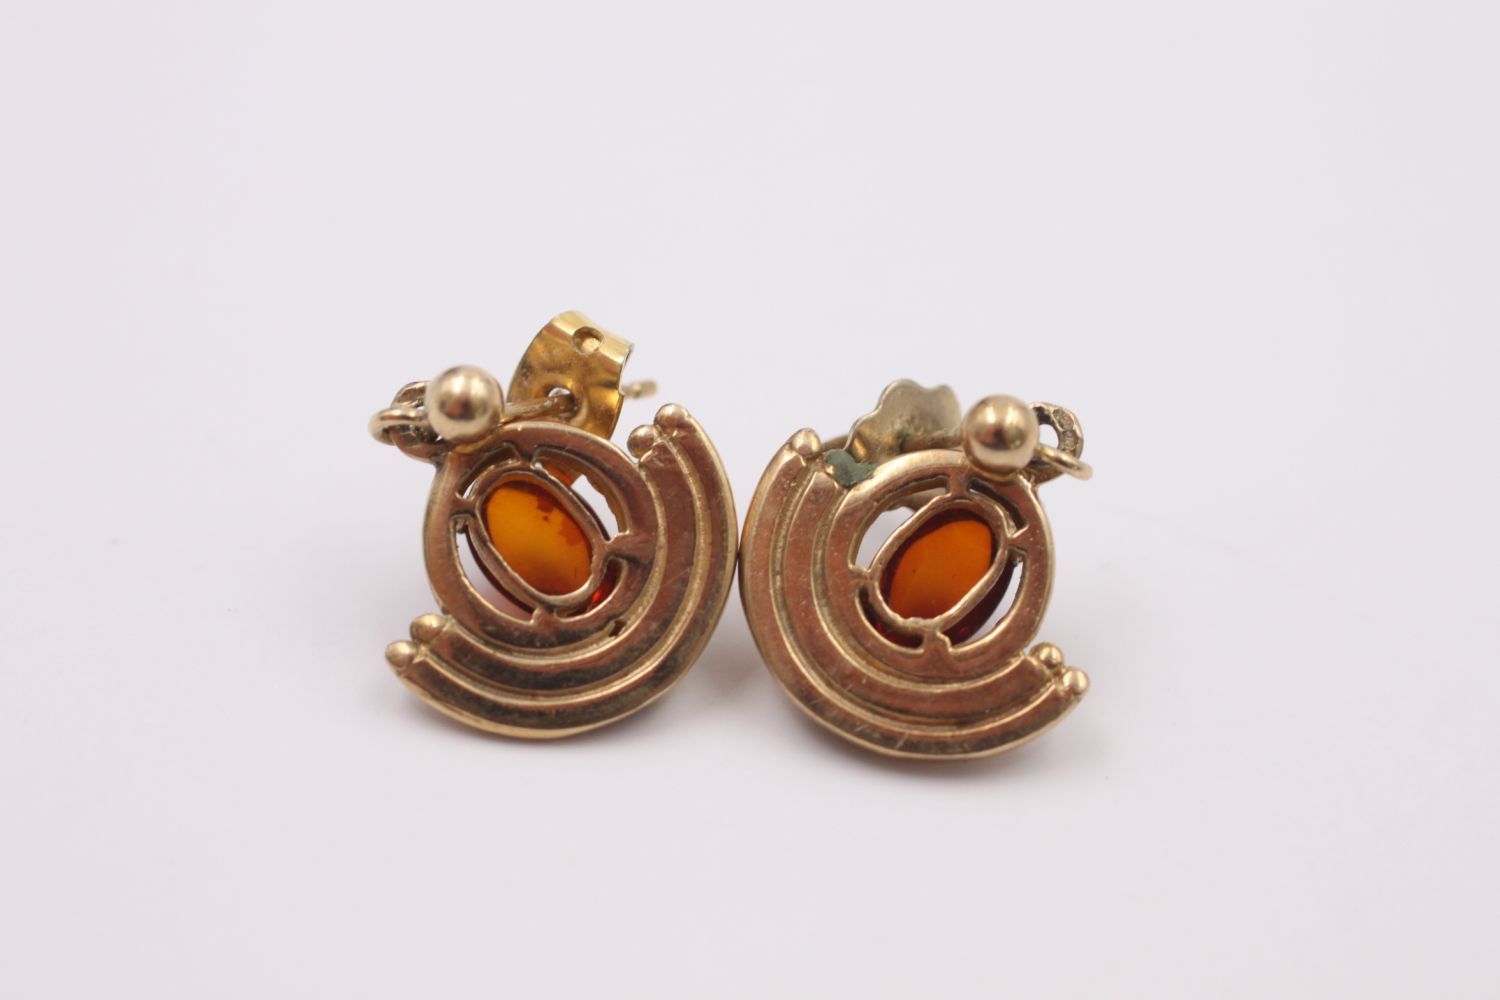 9ct gold vintage modernist design baltic amber drop earrings 4 grams gross - Image 4 of 4